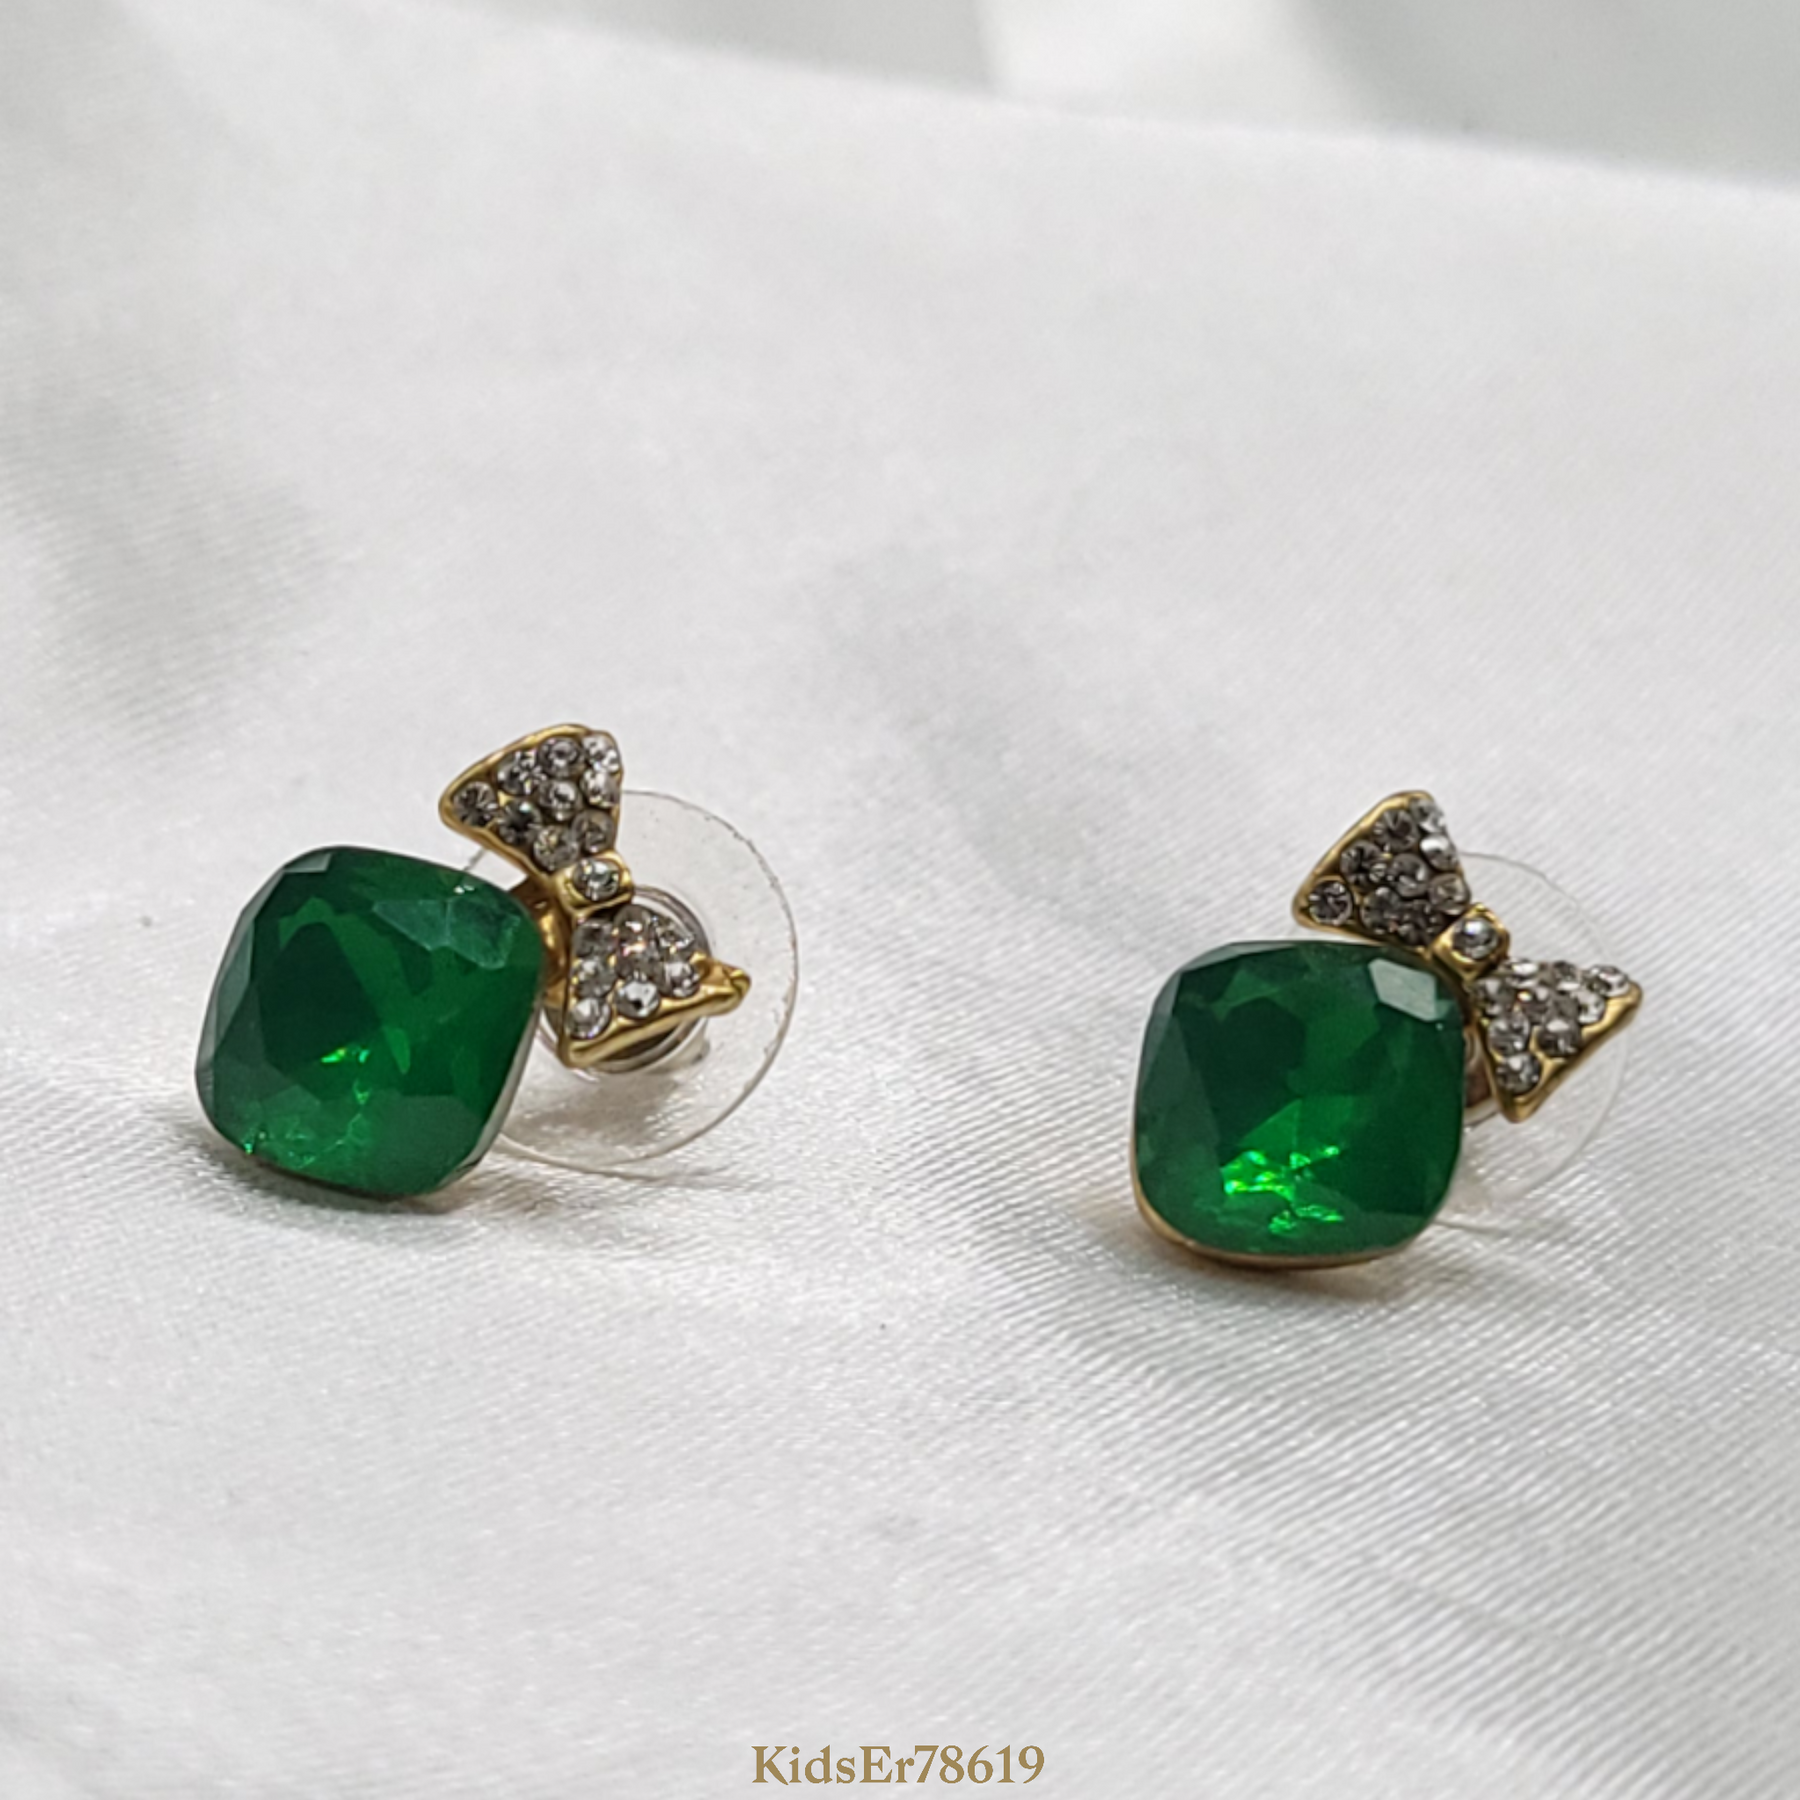 Emerald green earrings with diamond bow